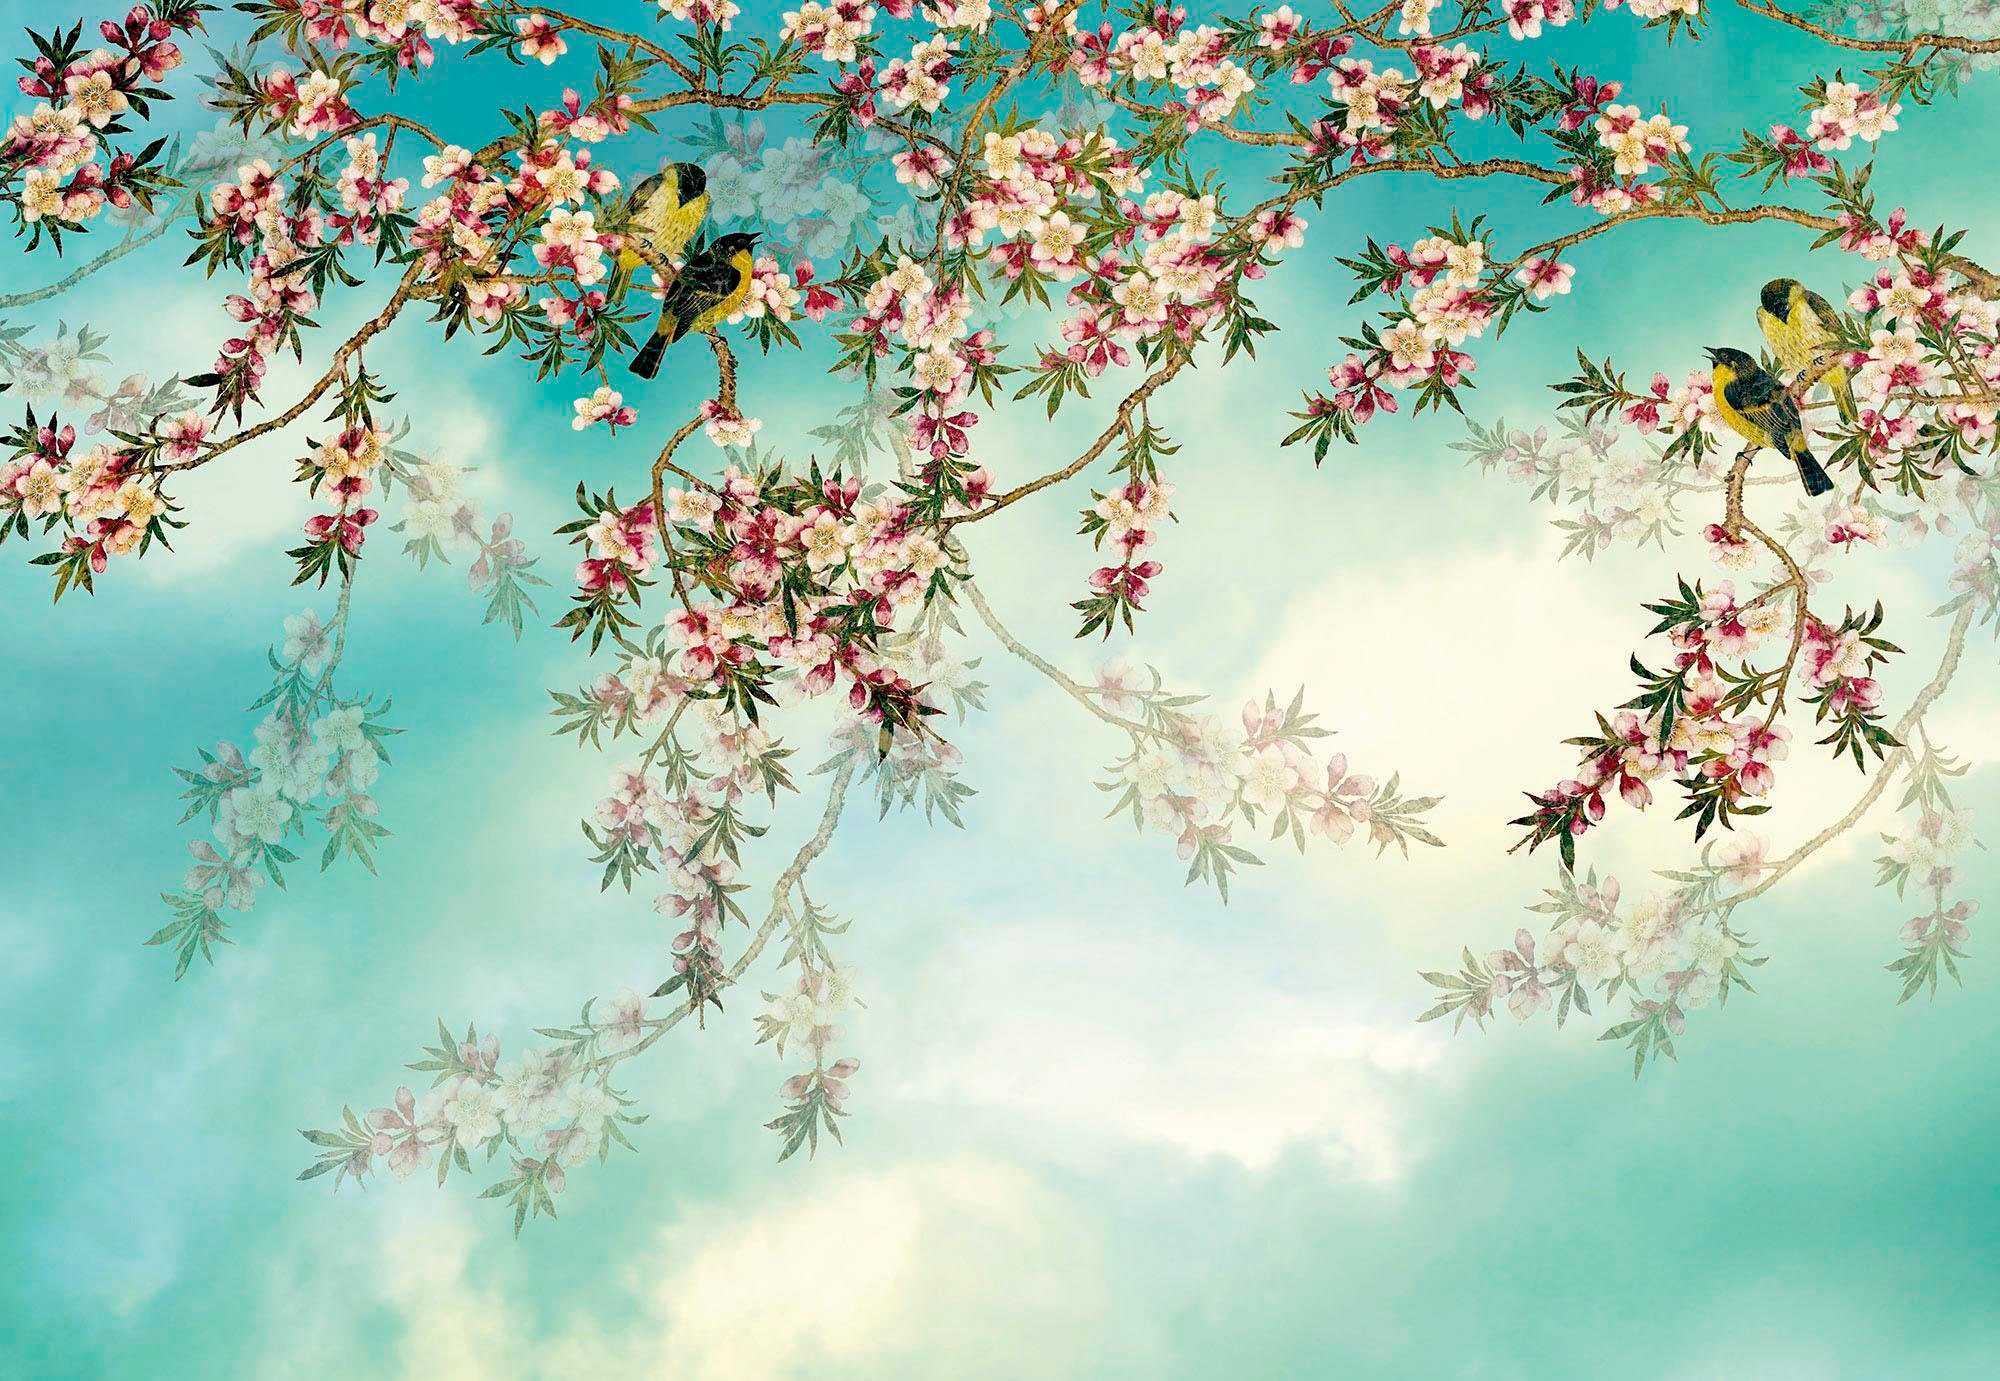 Fototapete »Sakura«, 368x254 cm (Breite x Höhe), inklusive Kleister